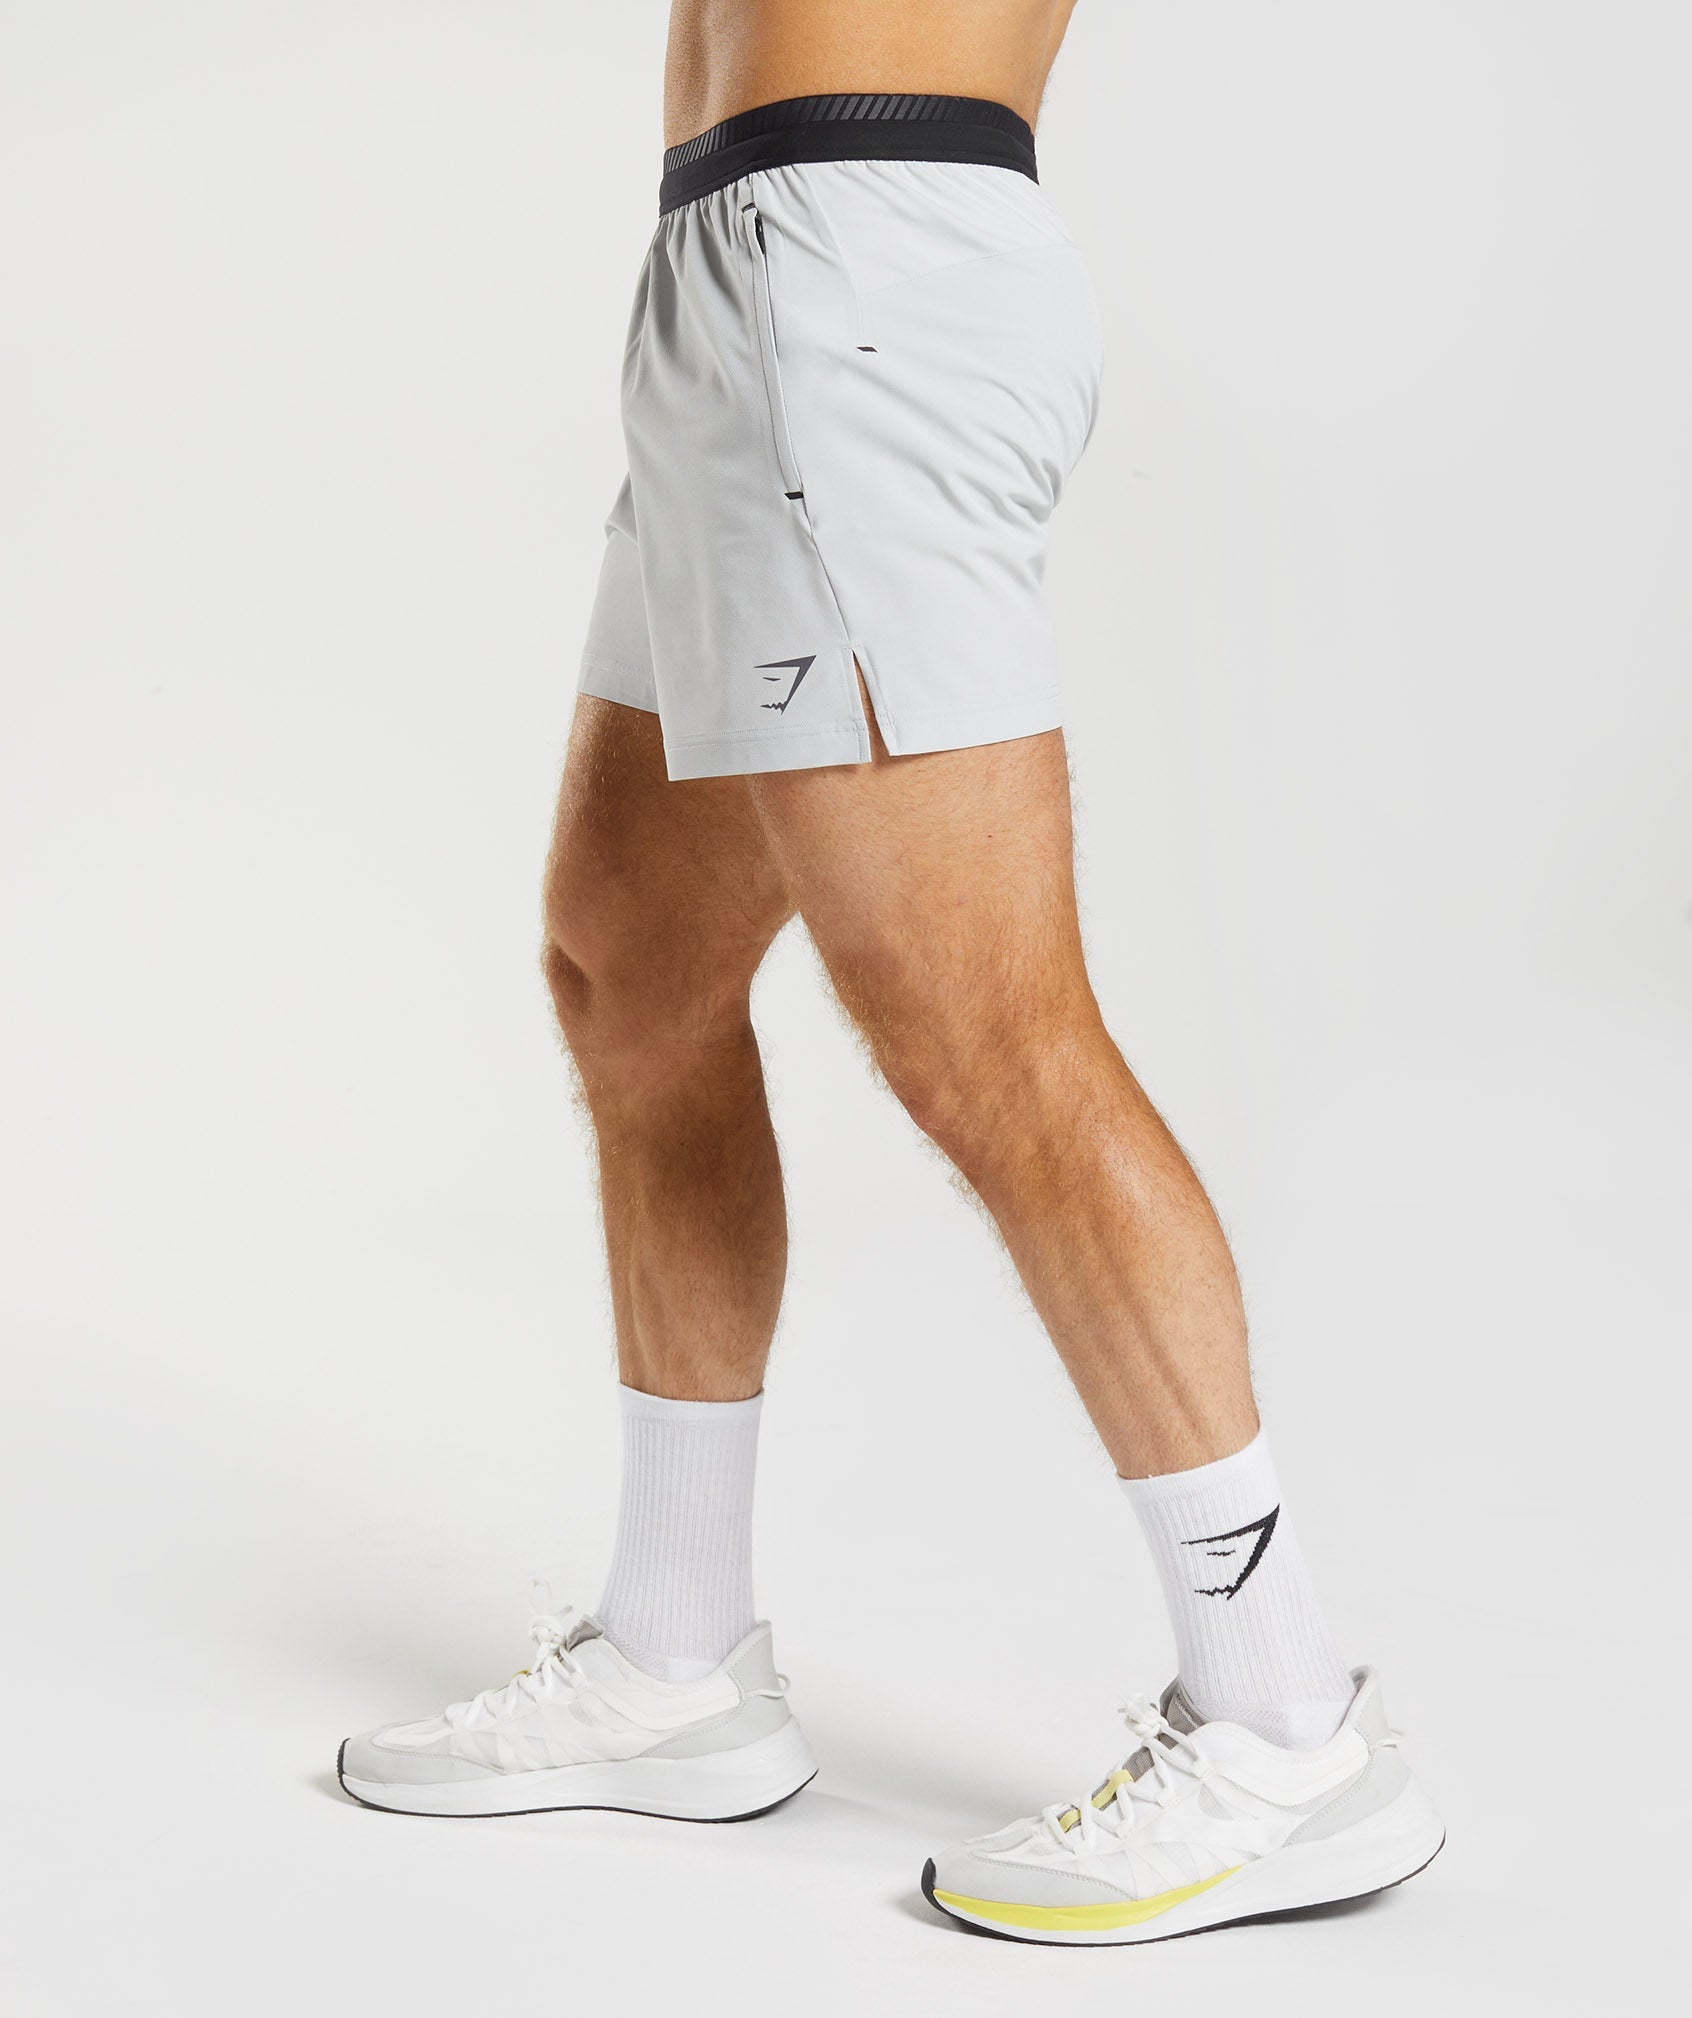 Apex 5" Hybrid Shorts in Light Grey - view 3